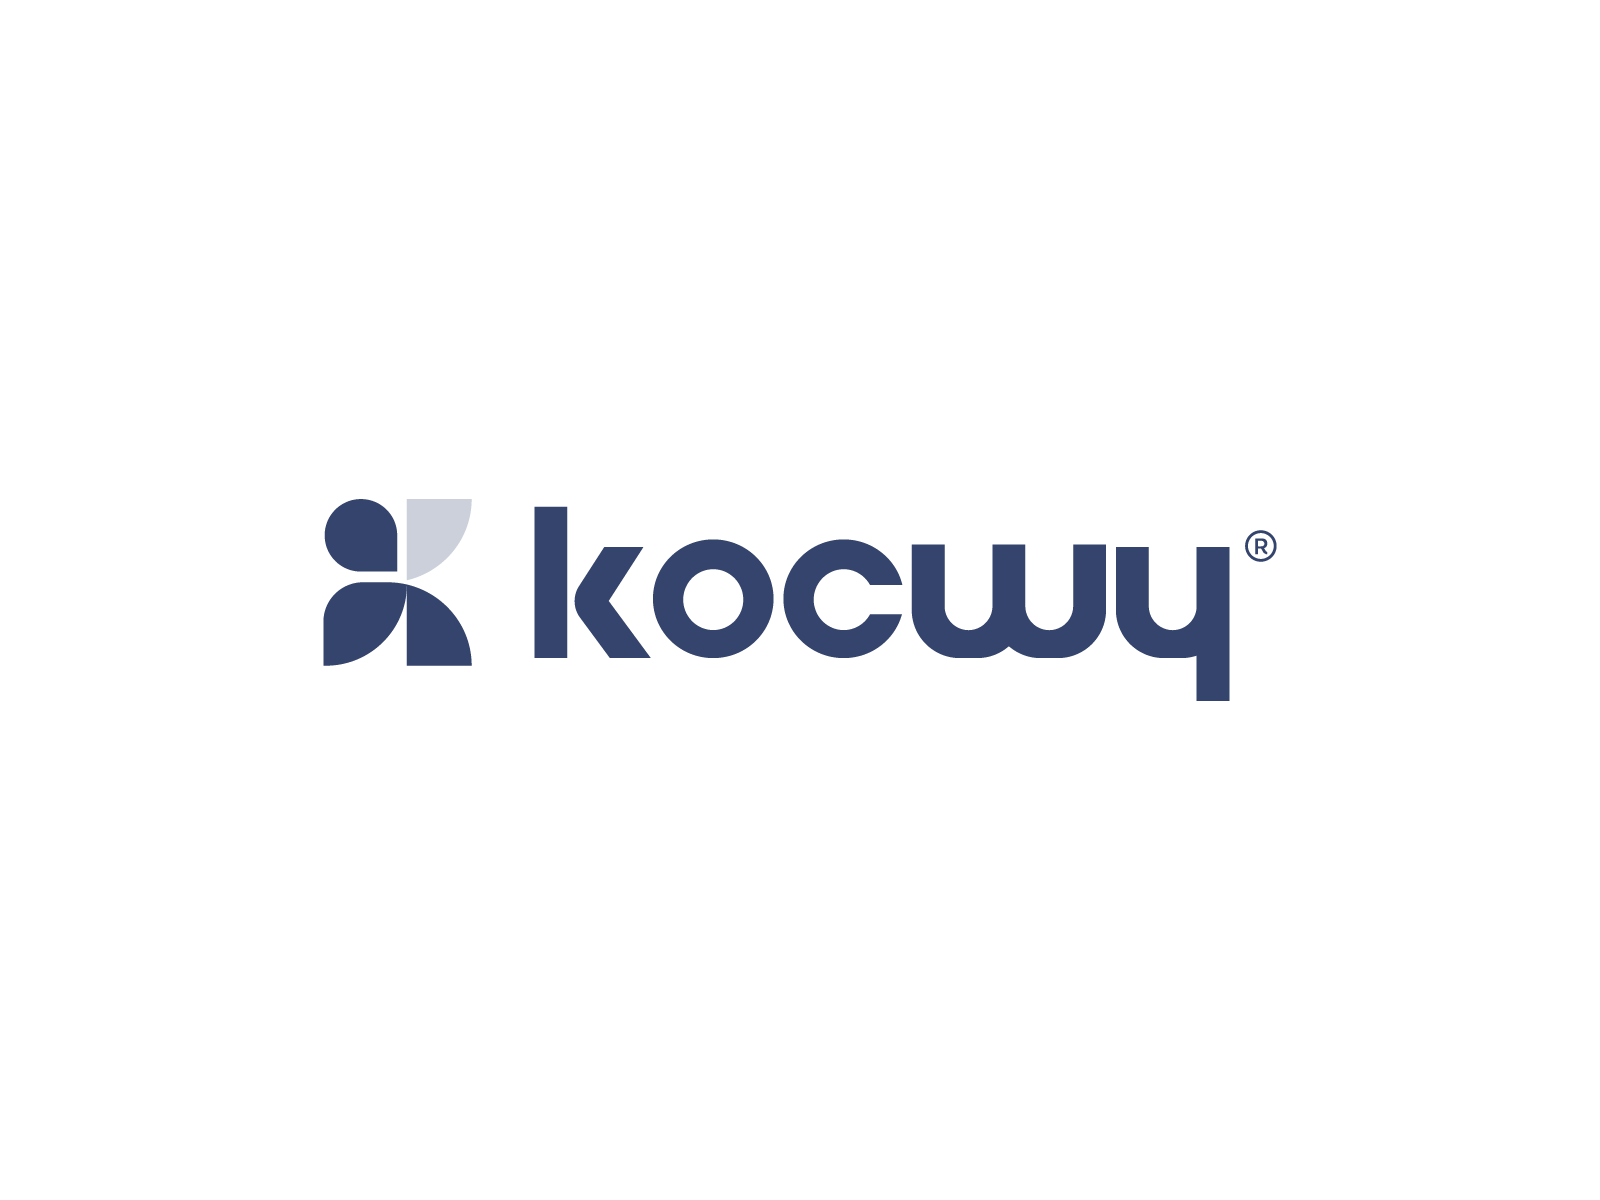 Kocwy Logo by Shawon on Dribbble